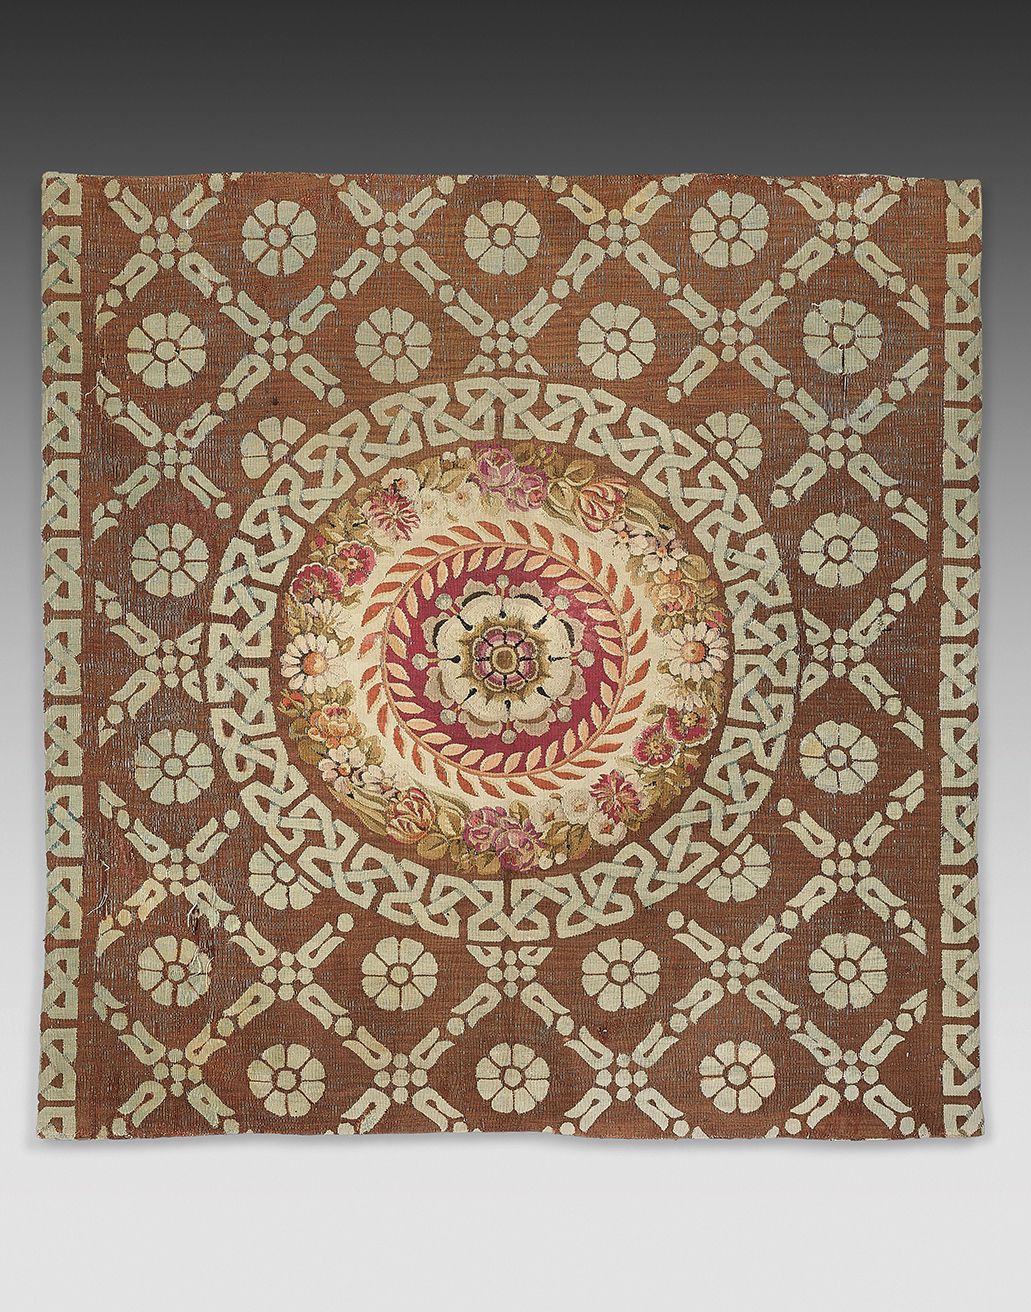 Null 小块平坦的地毯，中央有花环的徽章，周围有一个原始的卍字图案，场地是赭色的，装饰有花架图案。
Manufacture d'Aubusson, 约1830&hellip;